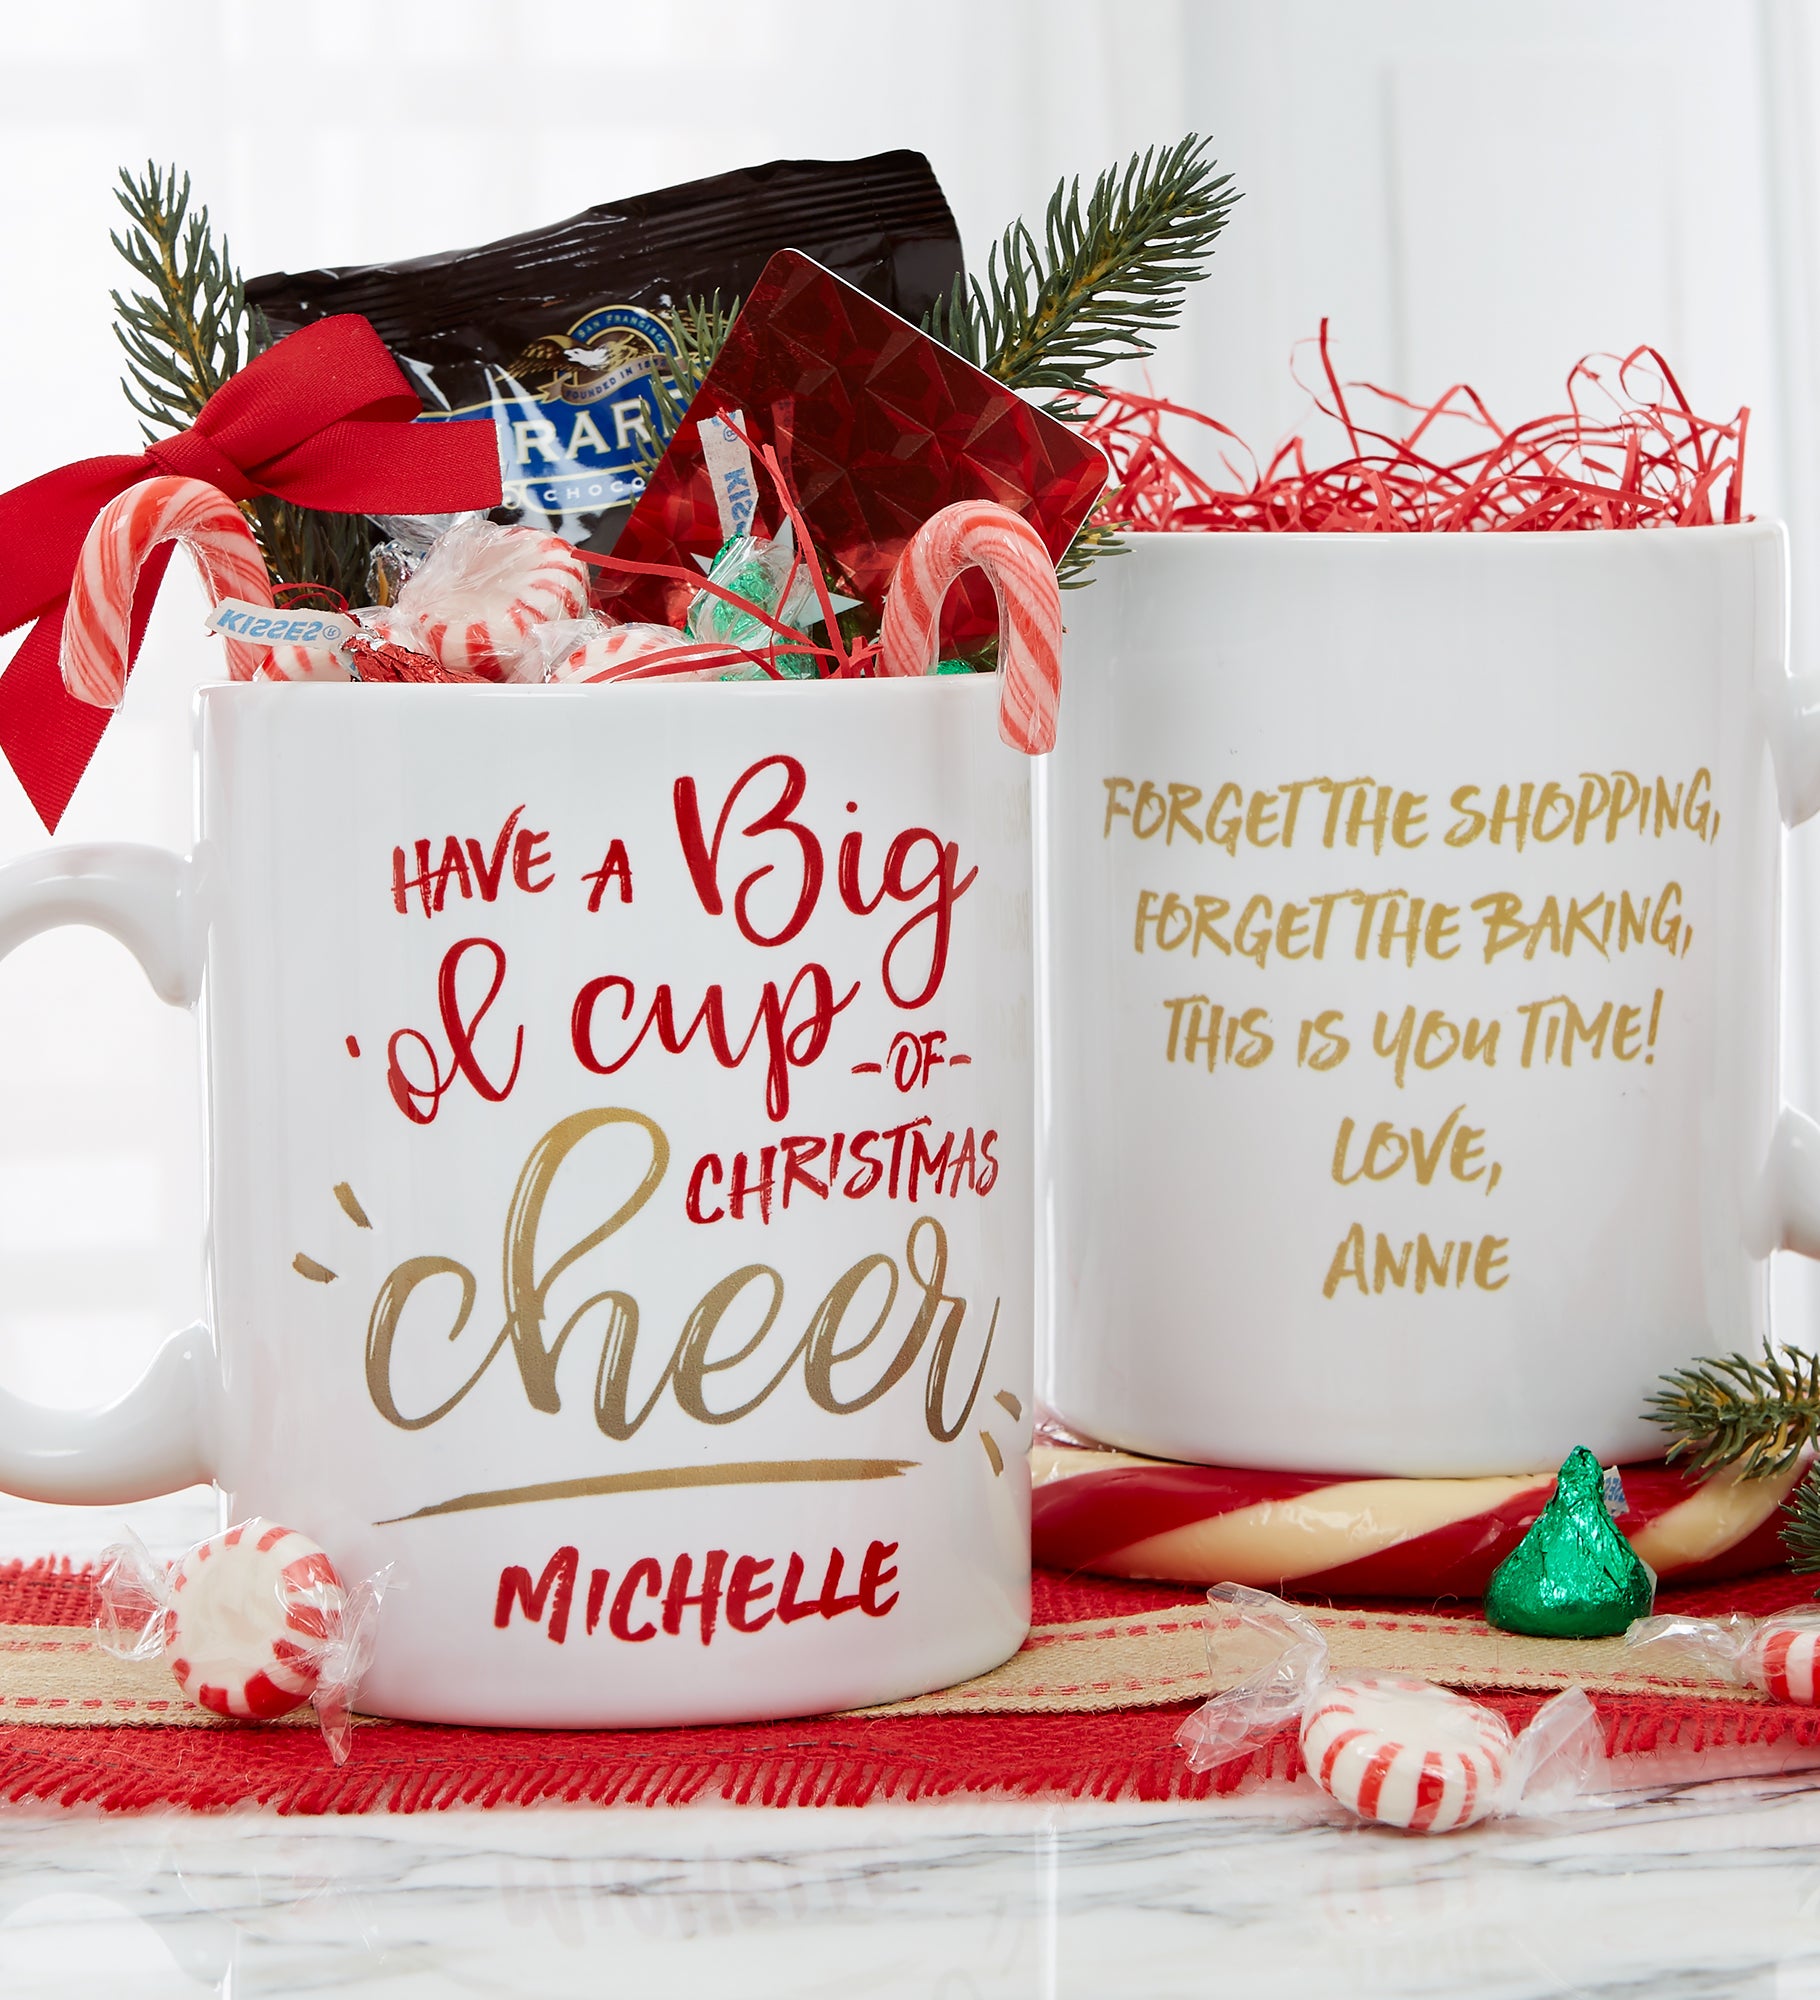 Christmas Cheer Personalized 30oz. Oversized Coffee Mug